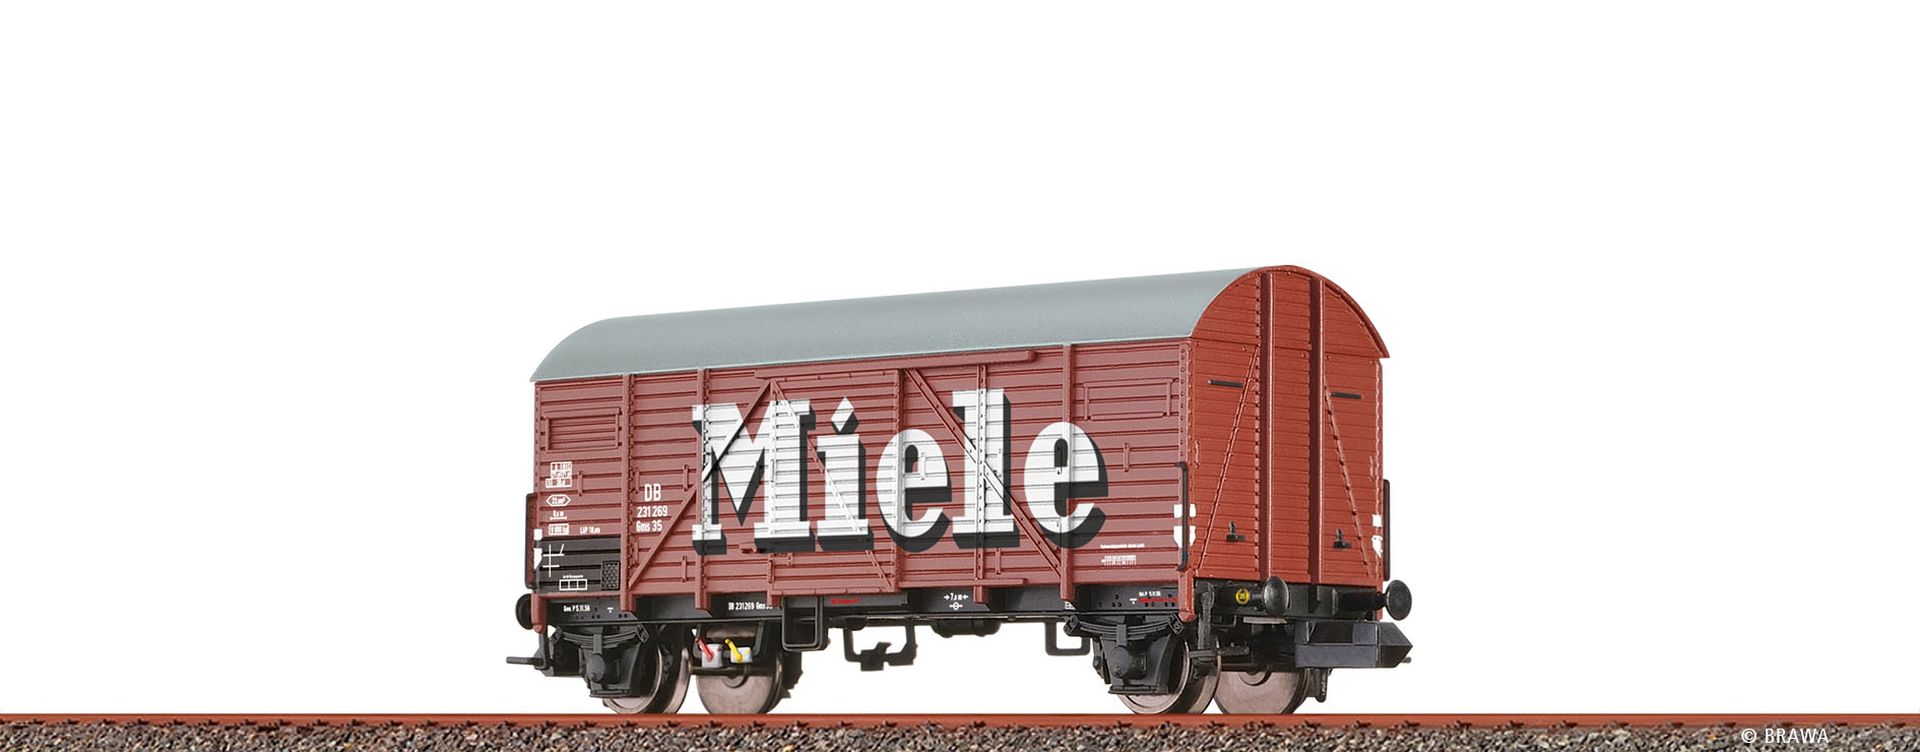 Brawa 67332 - Gedeckter Güterwagen Gms35 'Miele', DB, Ep.III